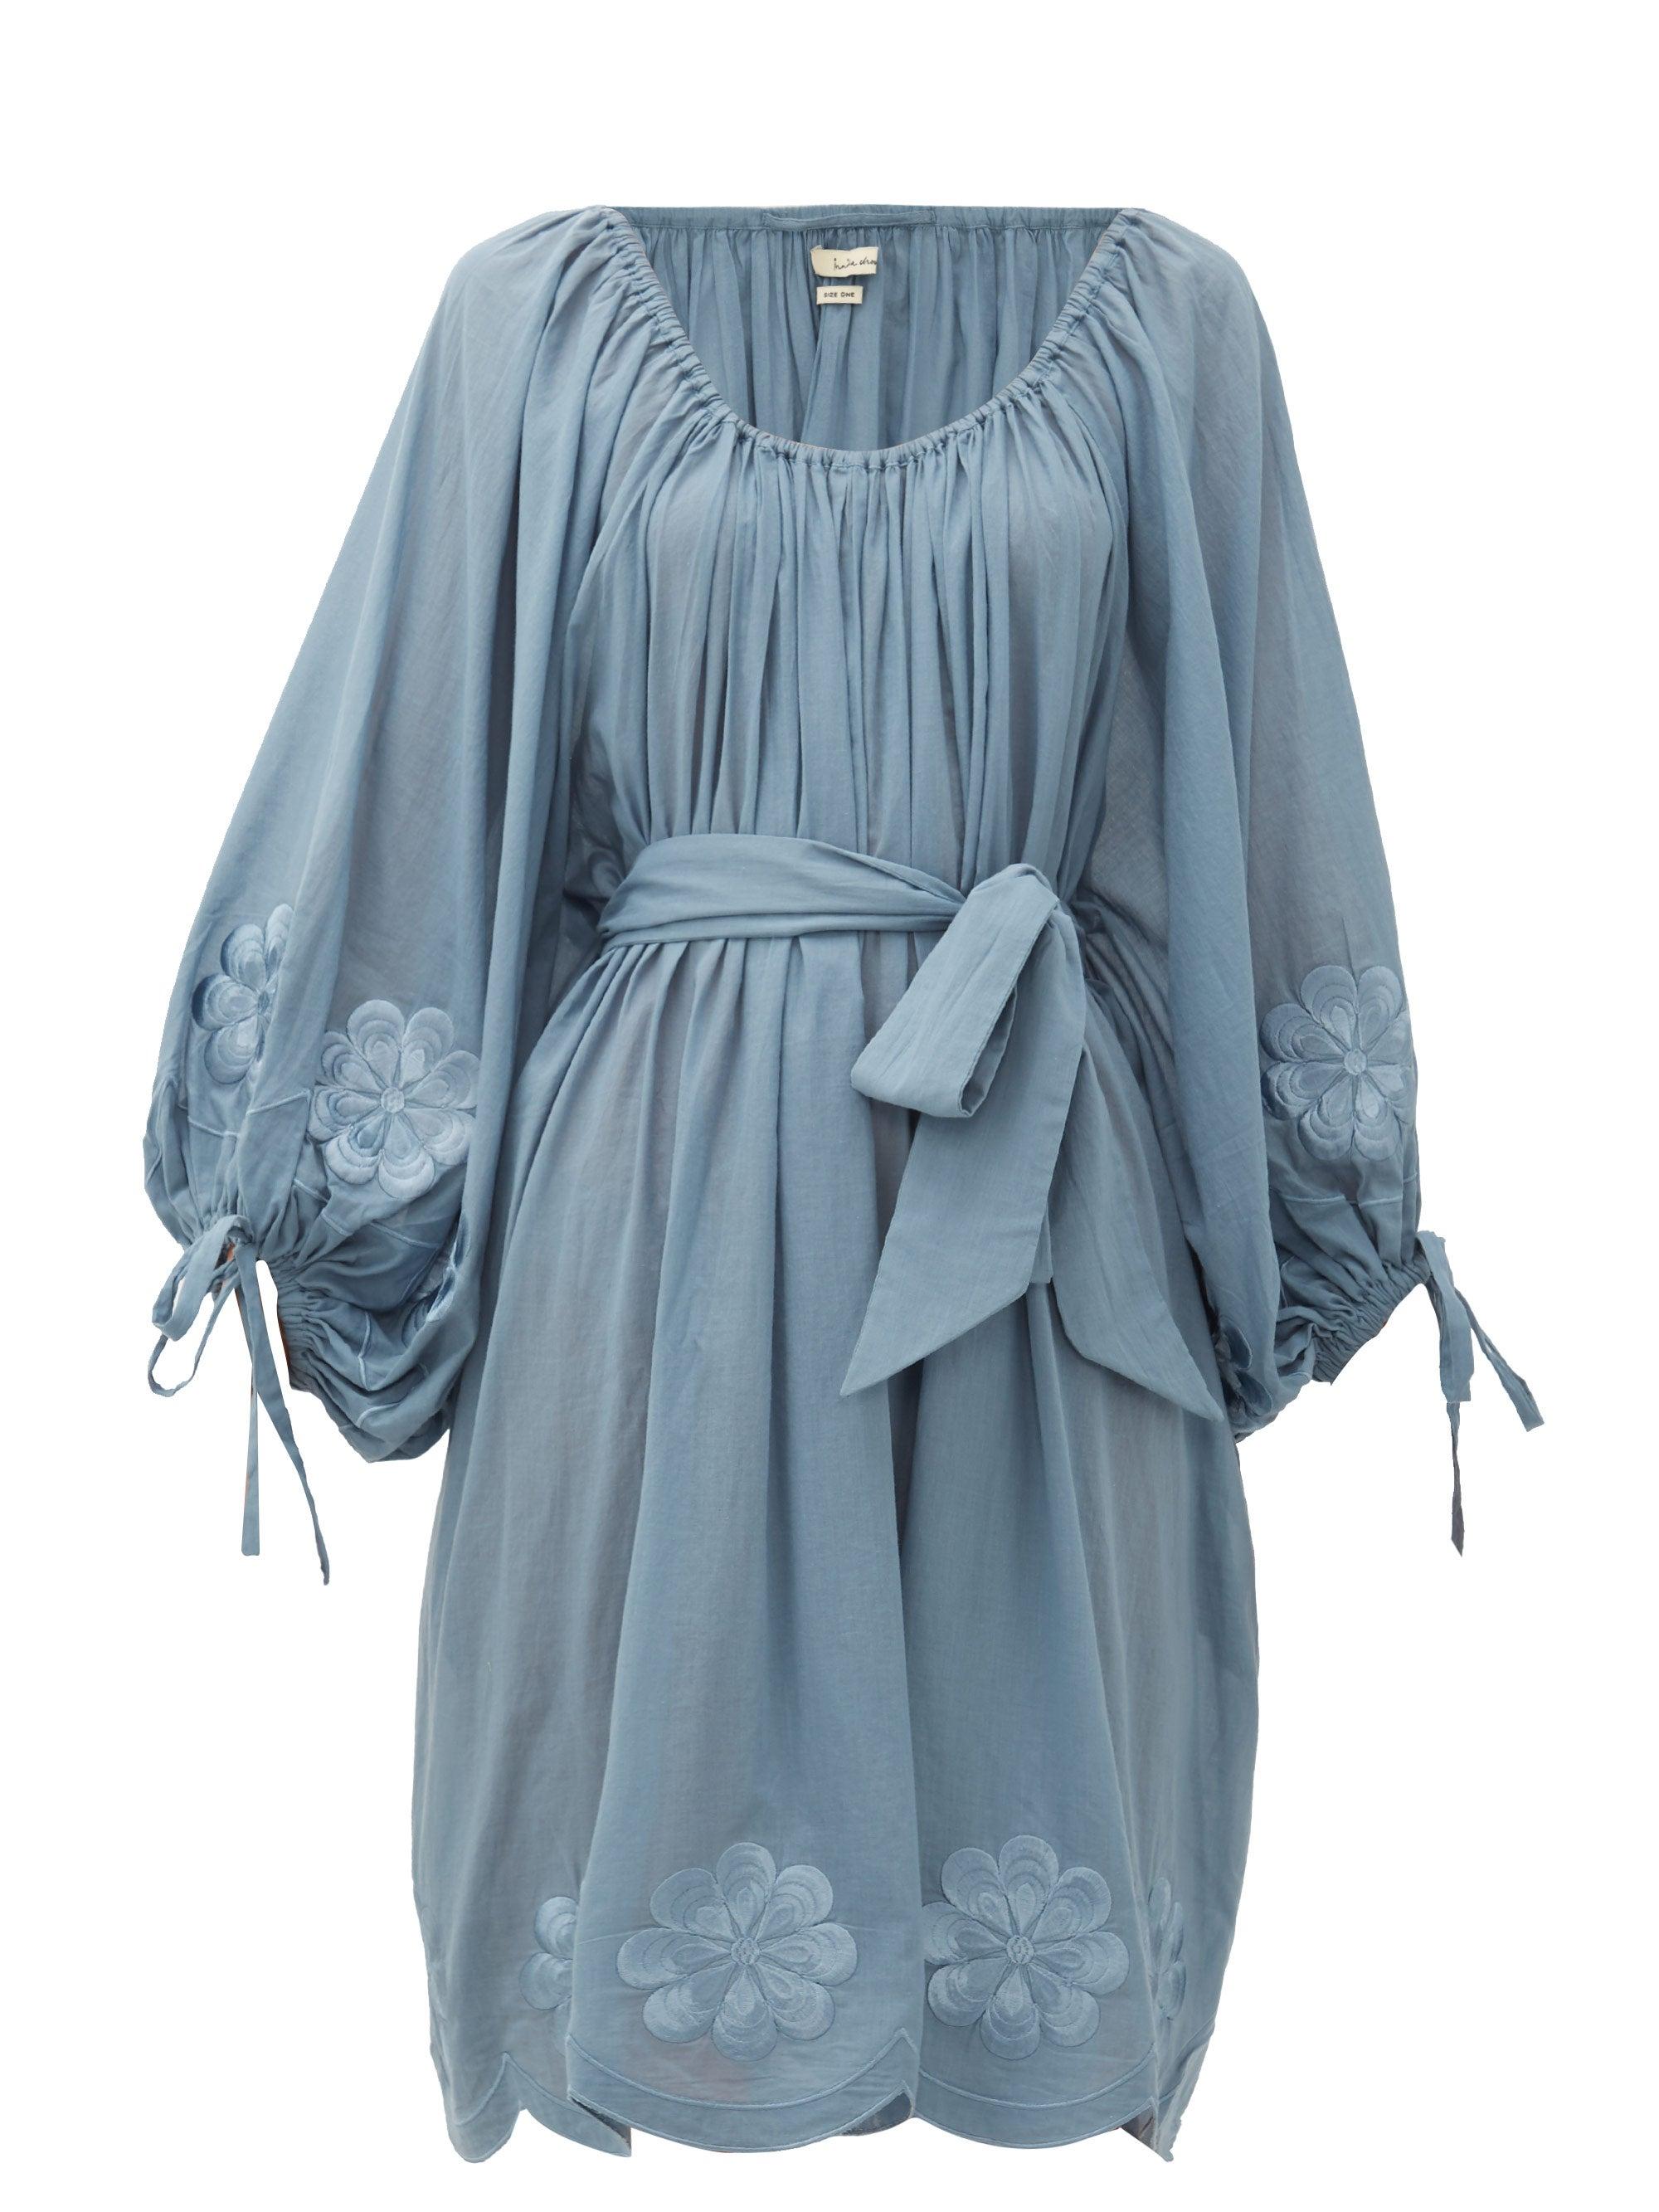 Innika Choo Frida Burds Embroidered Cotton Mini Dress in Blue - Lyst